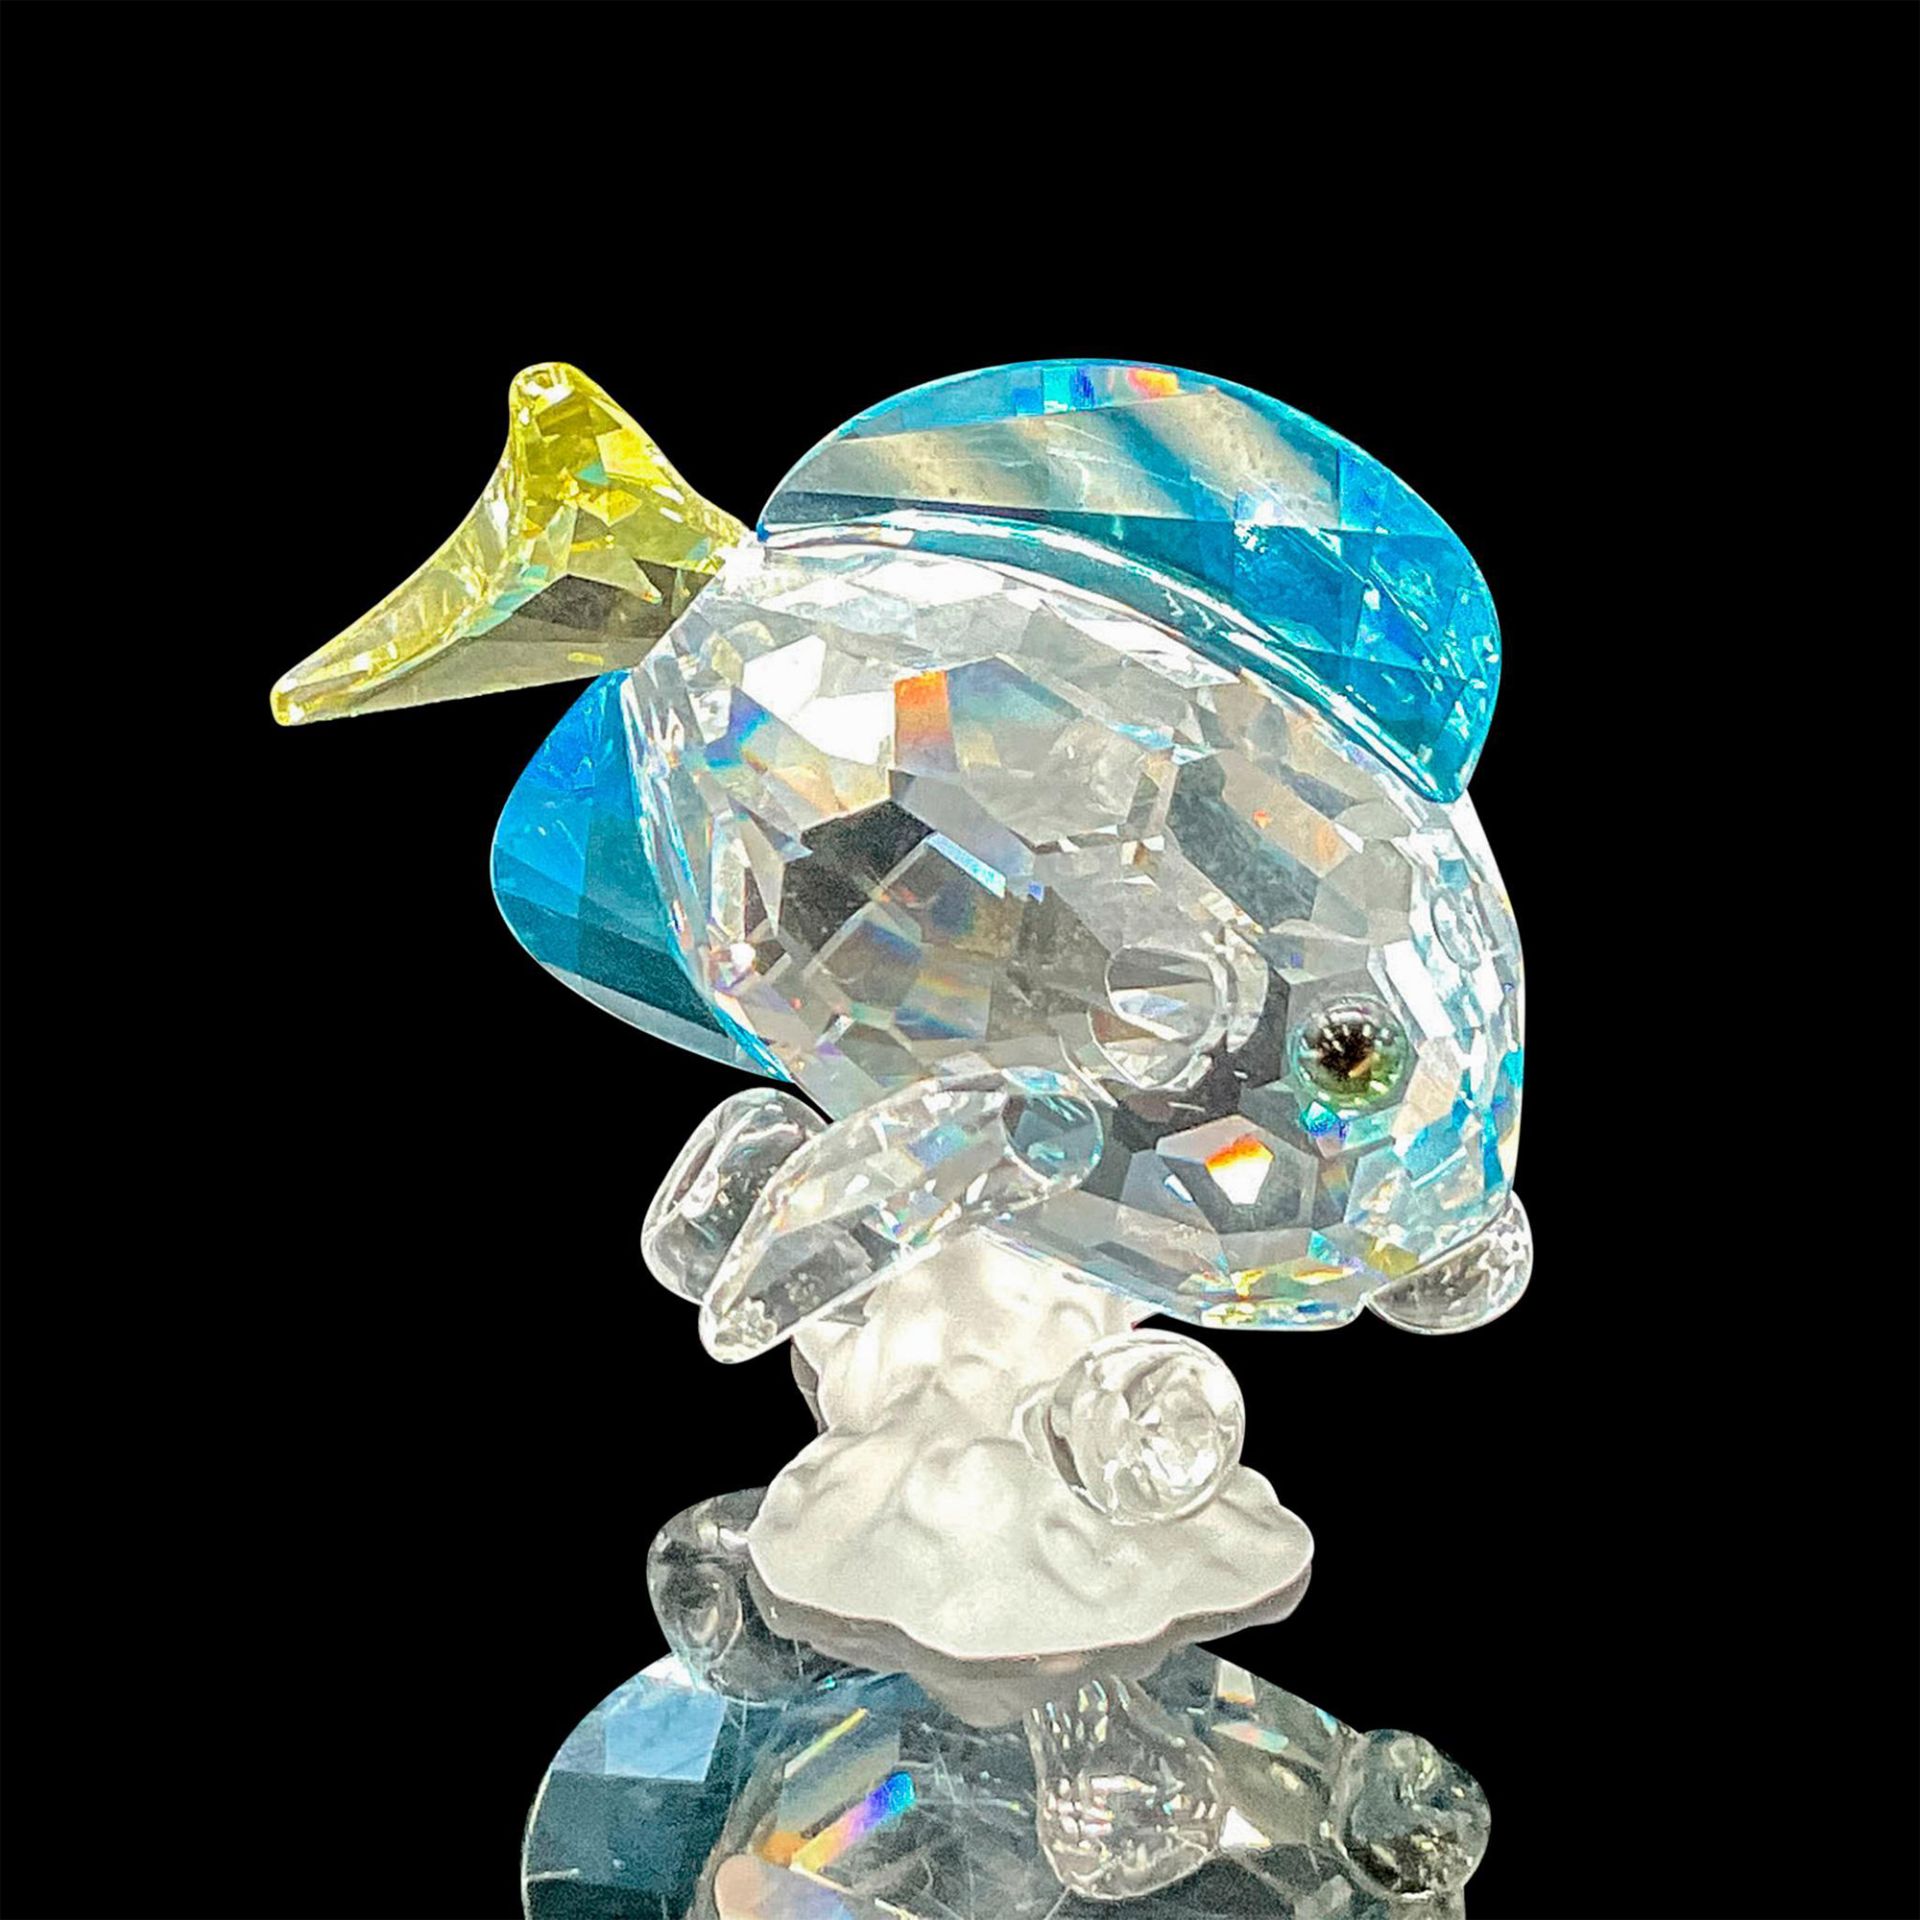 Swarovski Crystal Figurine, Blue Tang Fish